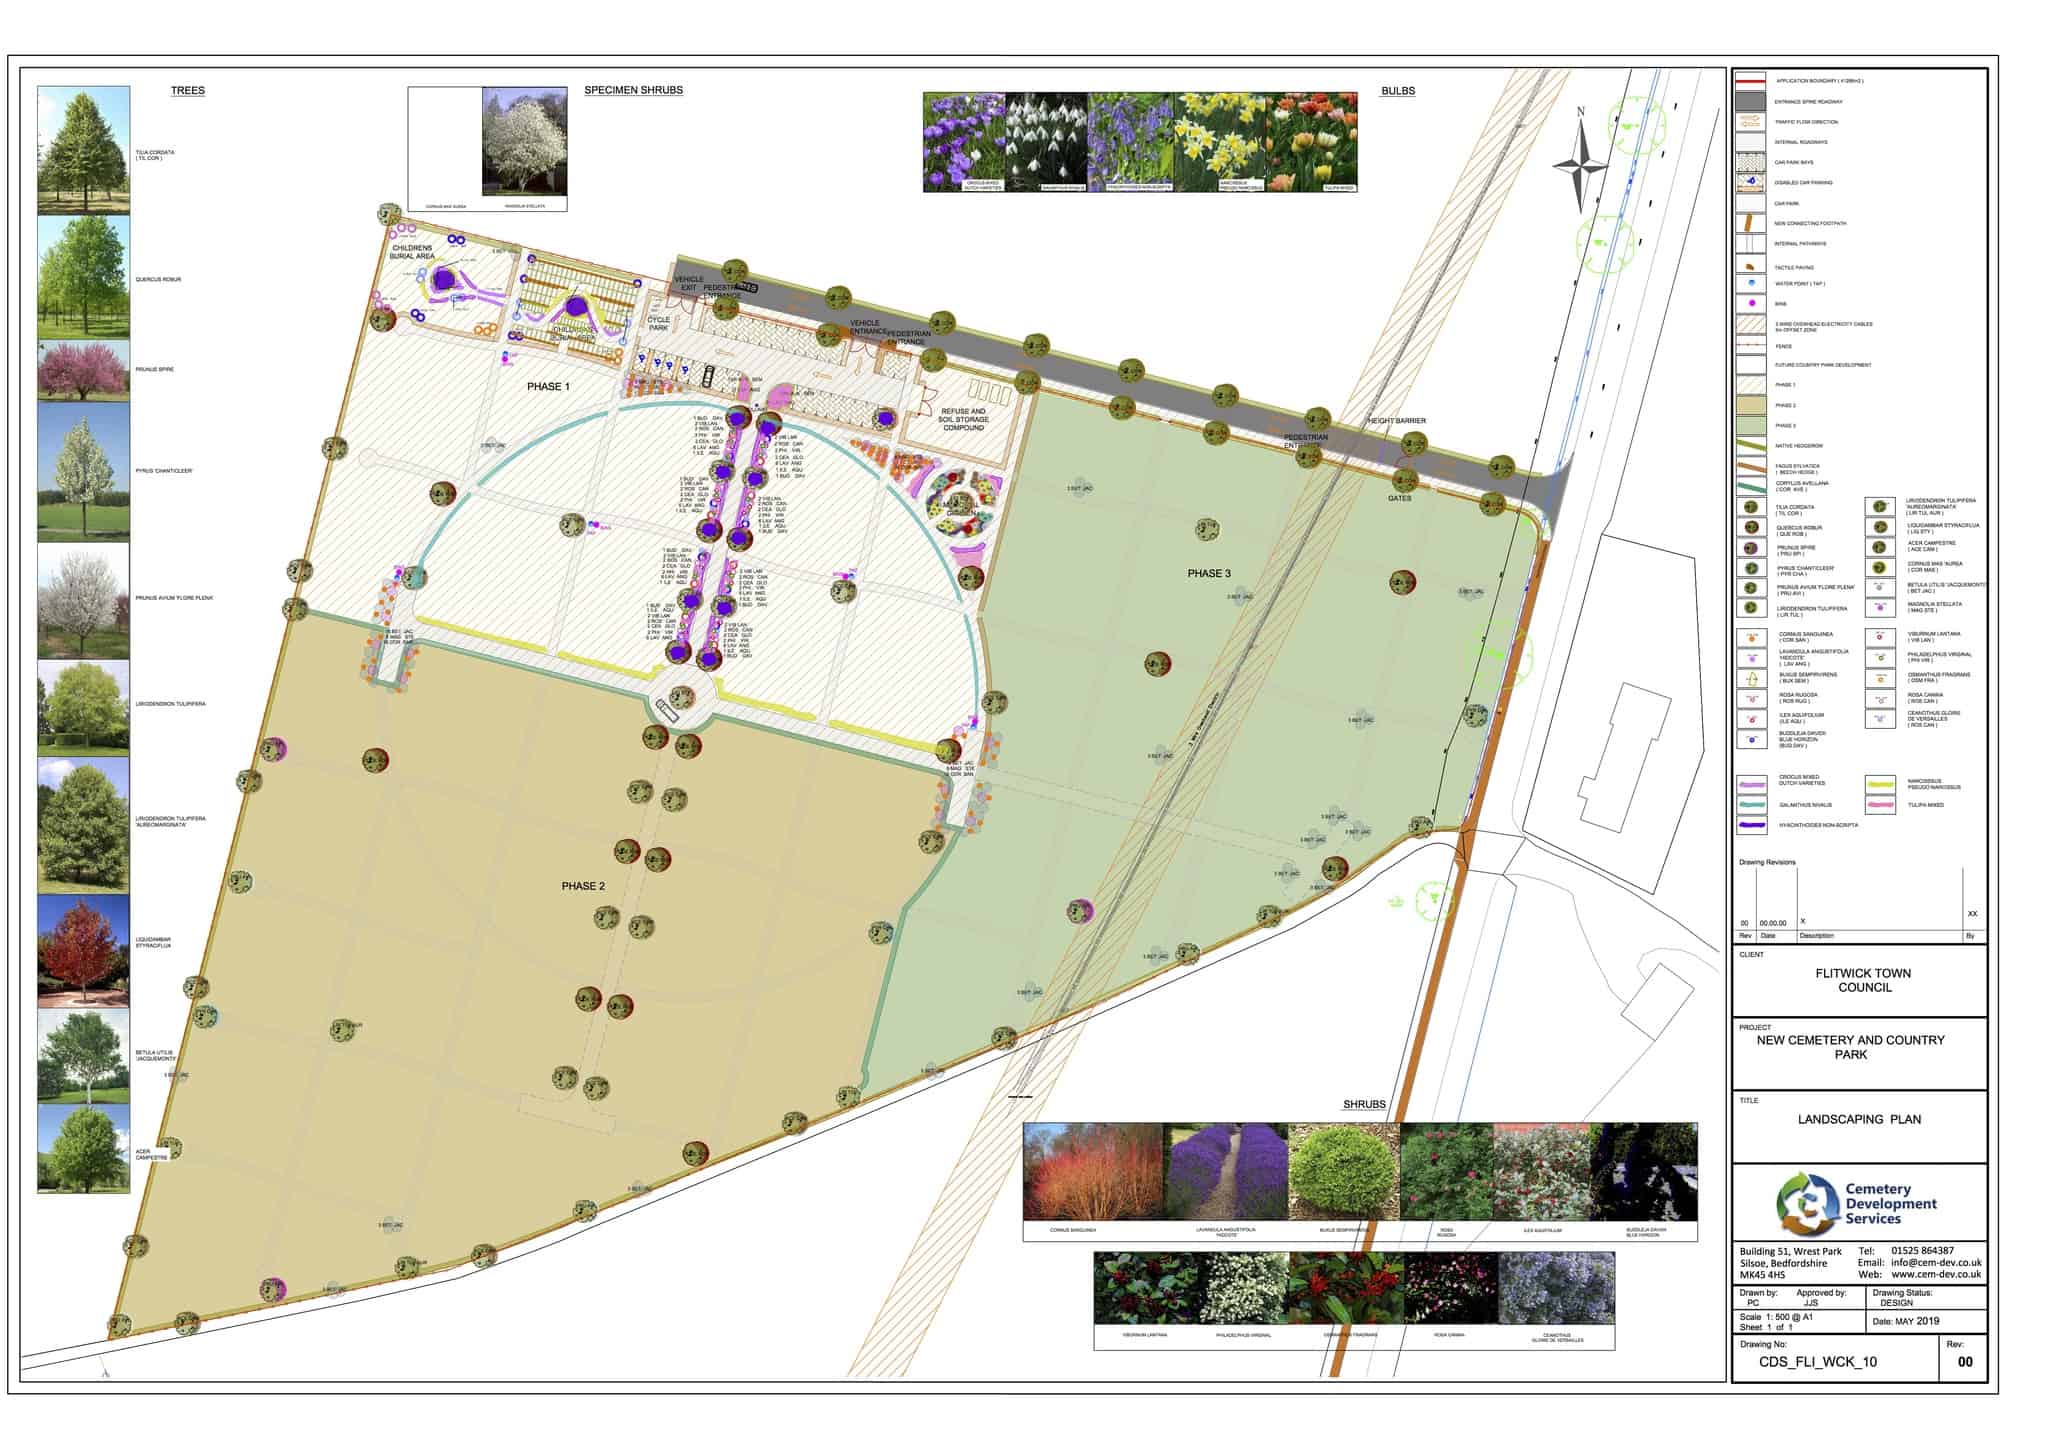 CDS_FLI_WCK_10_00_Cemetery Landscaping plan[2][15]